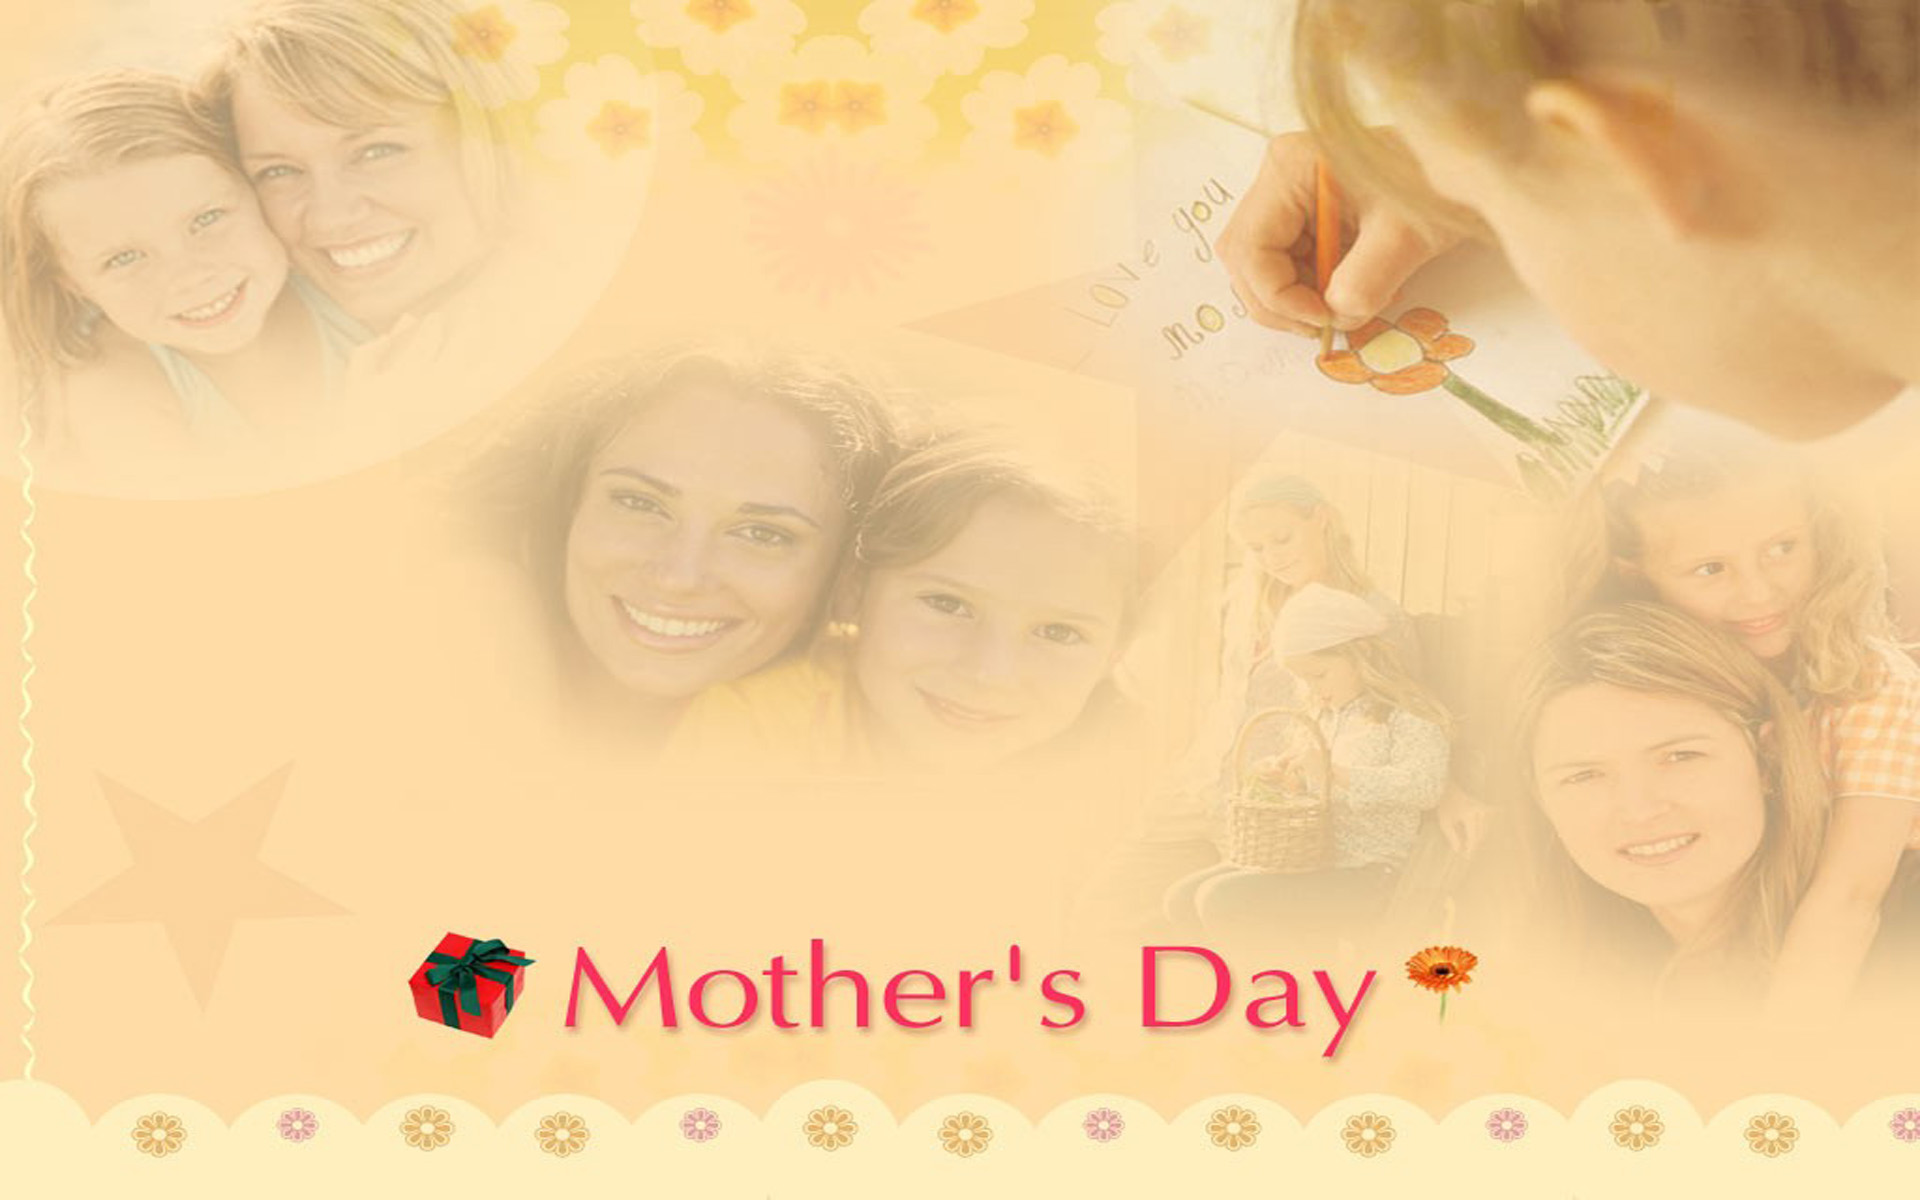 Mother's Day background Images | UK-USAFESTIVALS